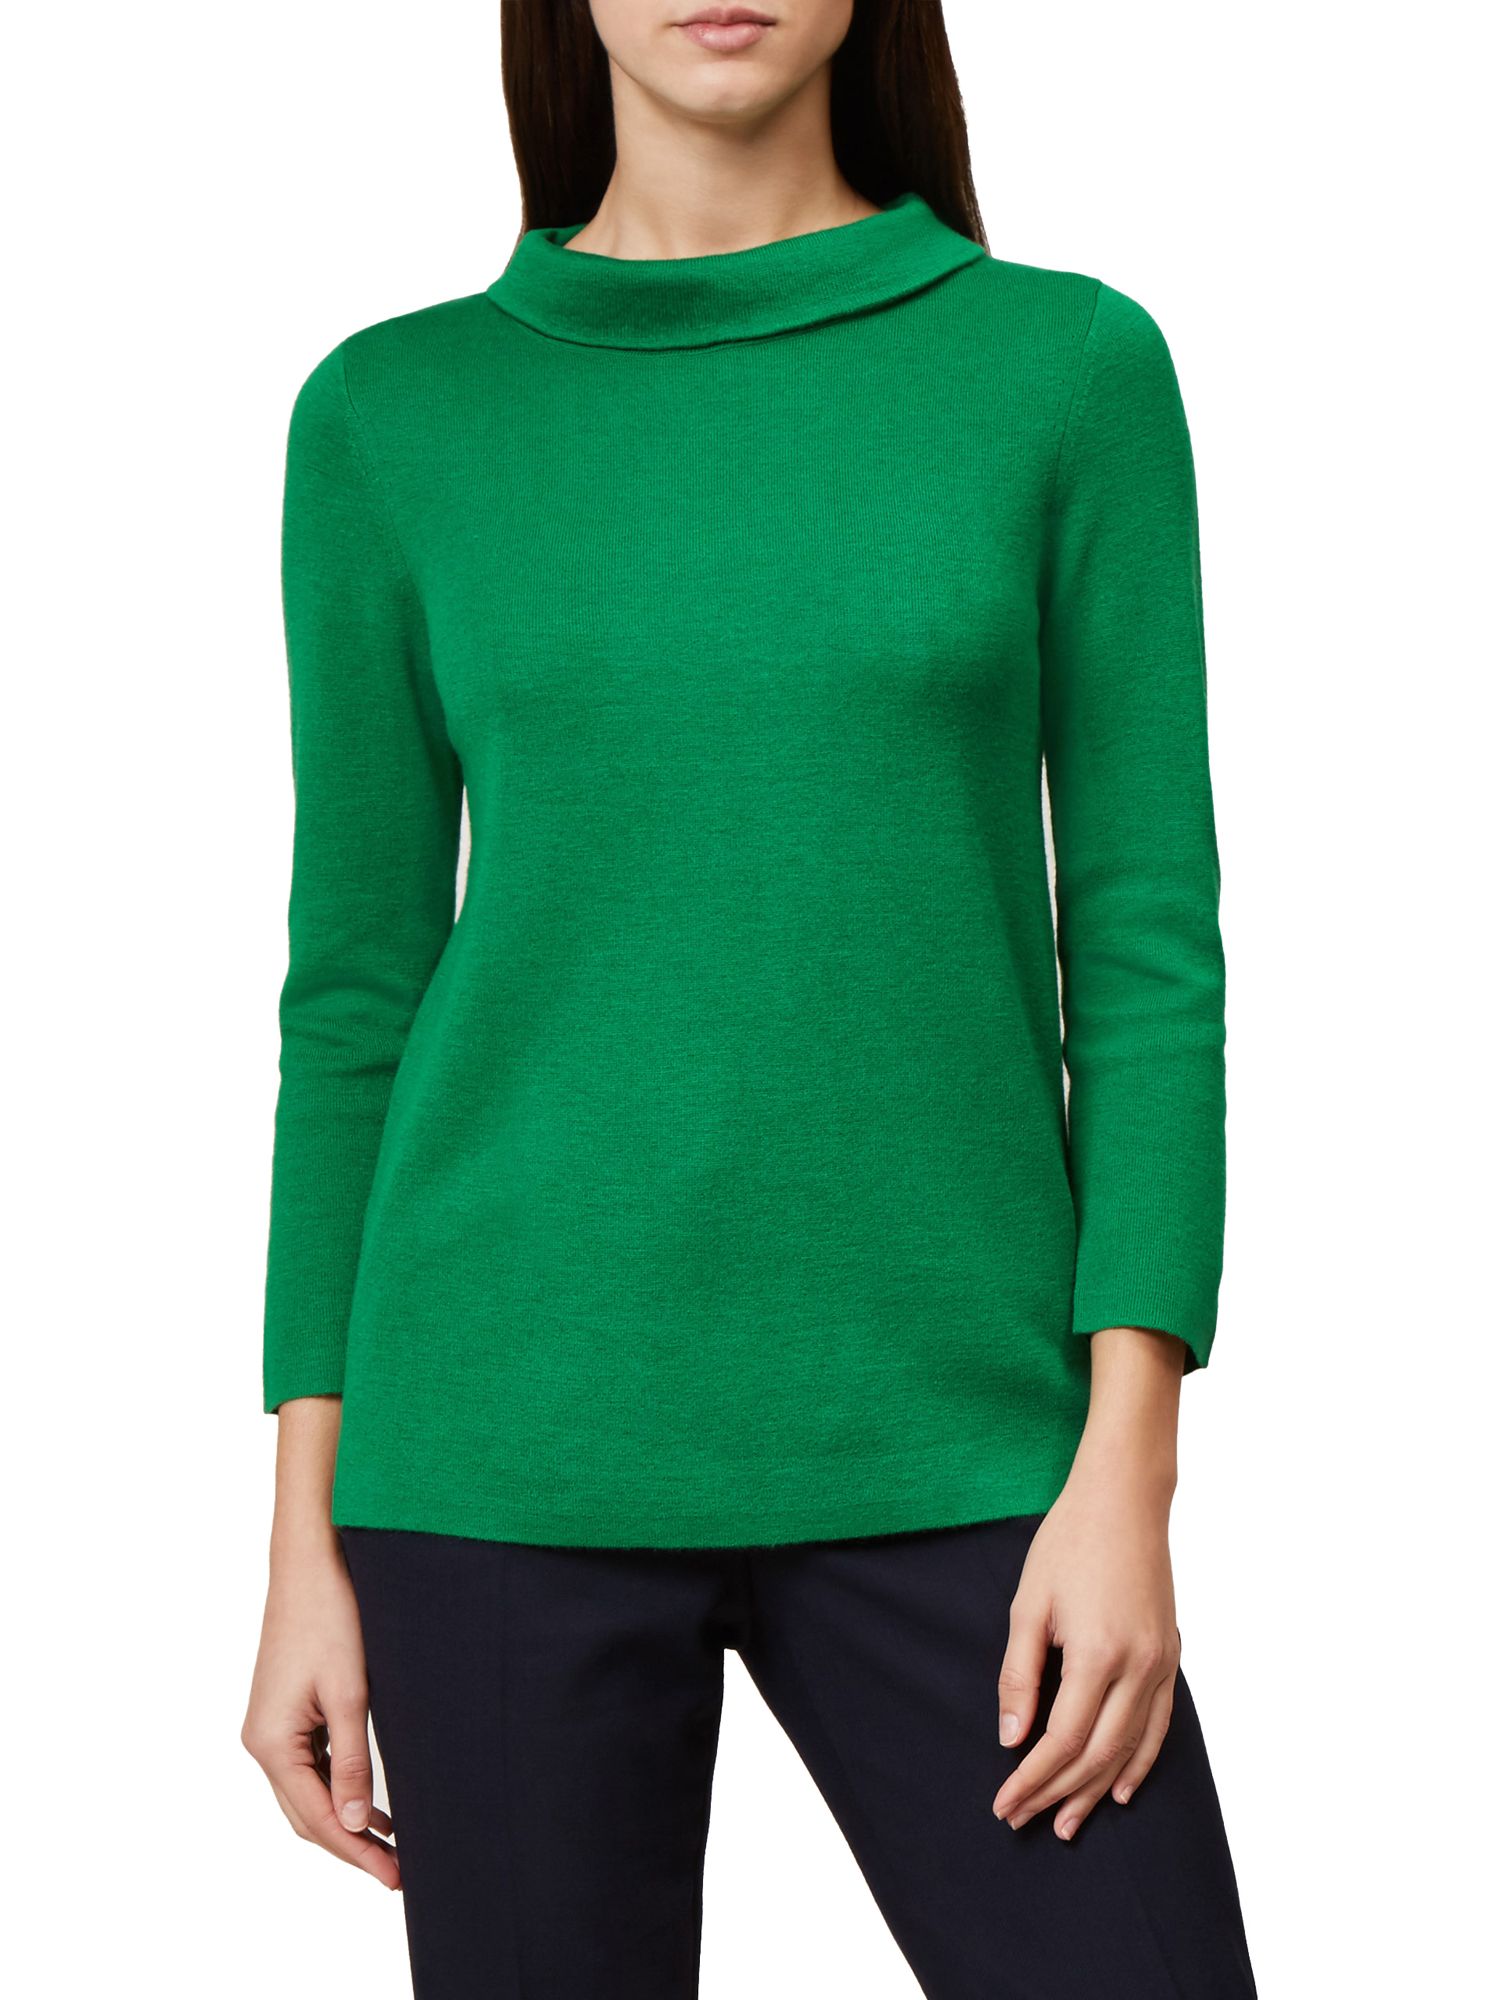 Hobbs Round Neck Anastasia Sweatshirt, Apple Green